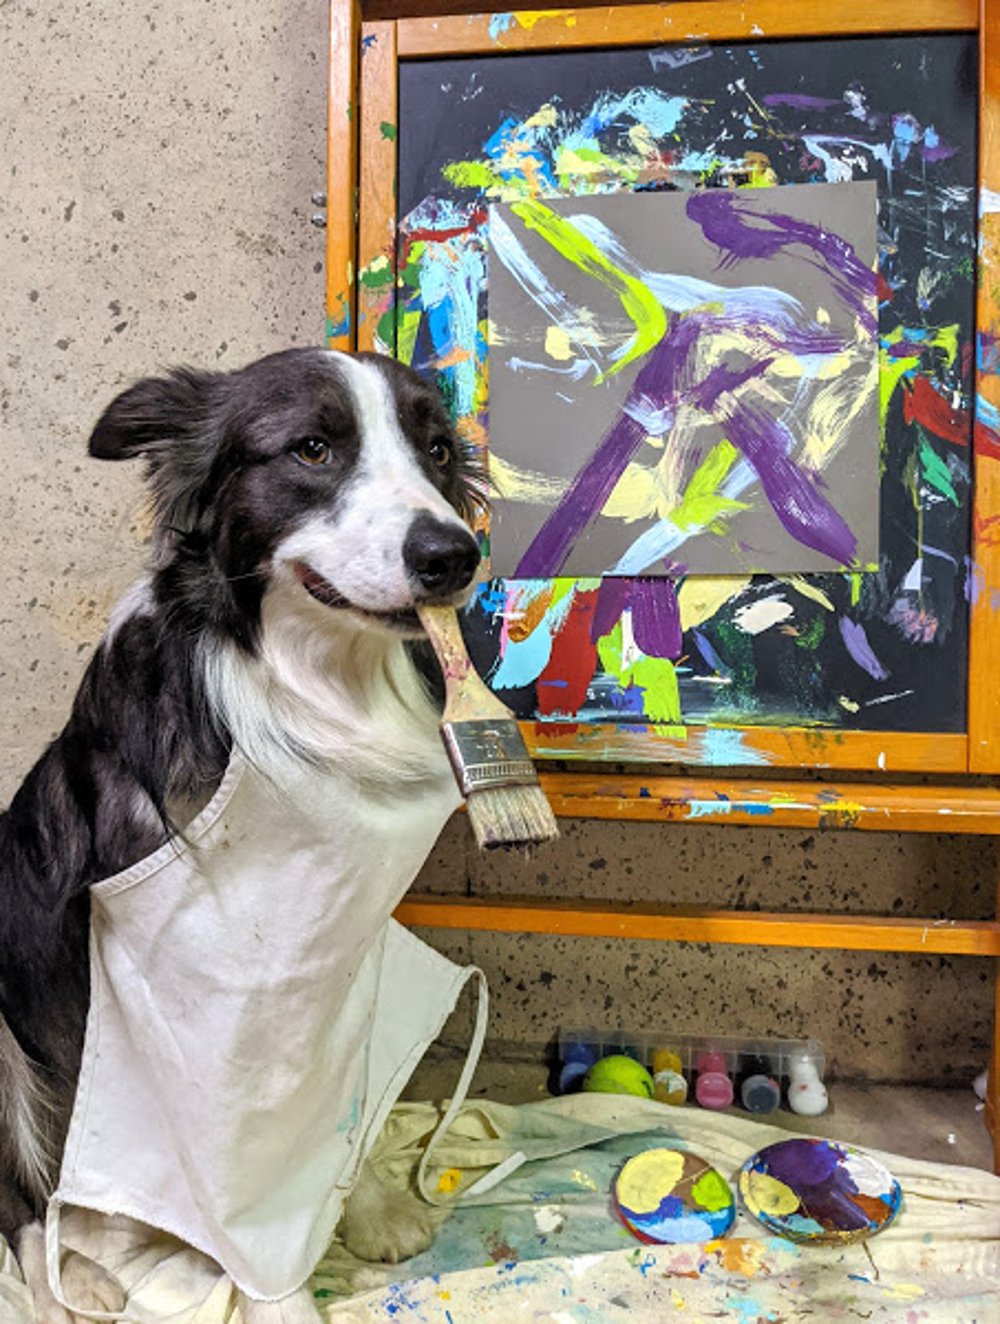 leonard the painting dog